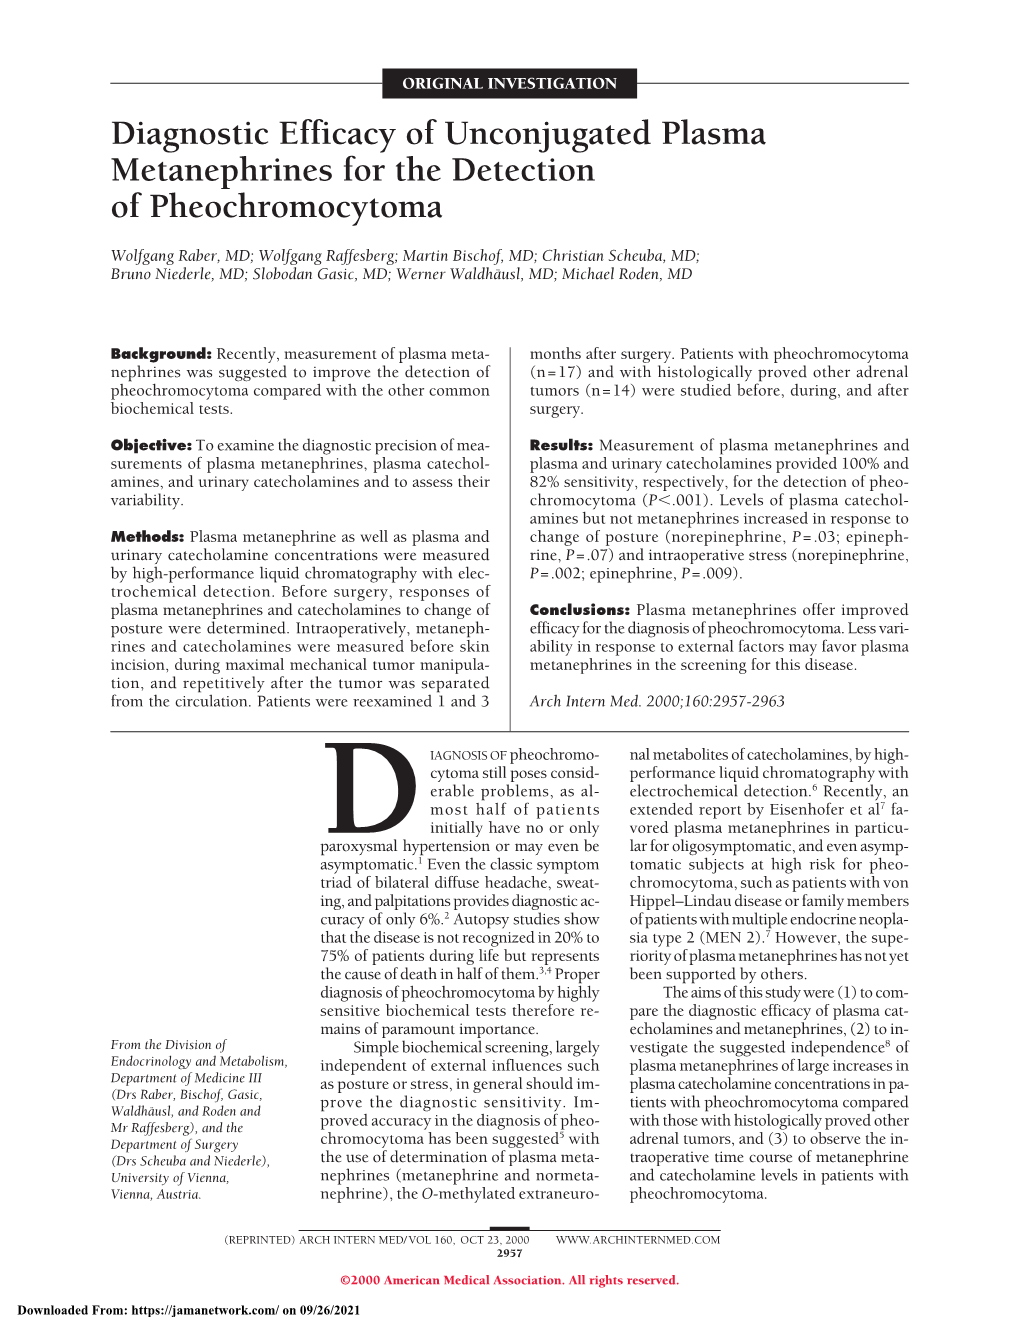 Diagnostic Efficacy of Unconjugated Plasma Metanephrines for the Detection of Pheochromocytoma